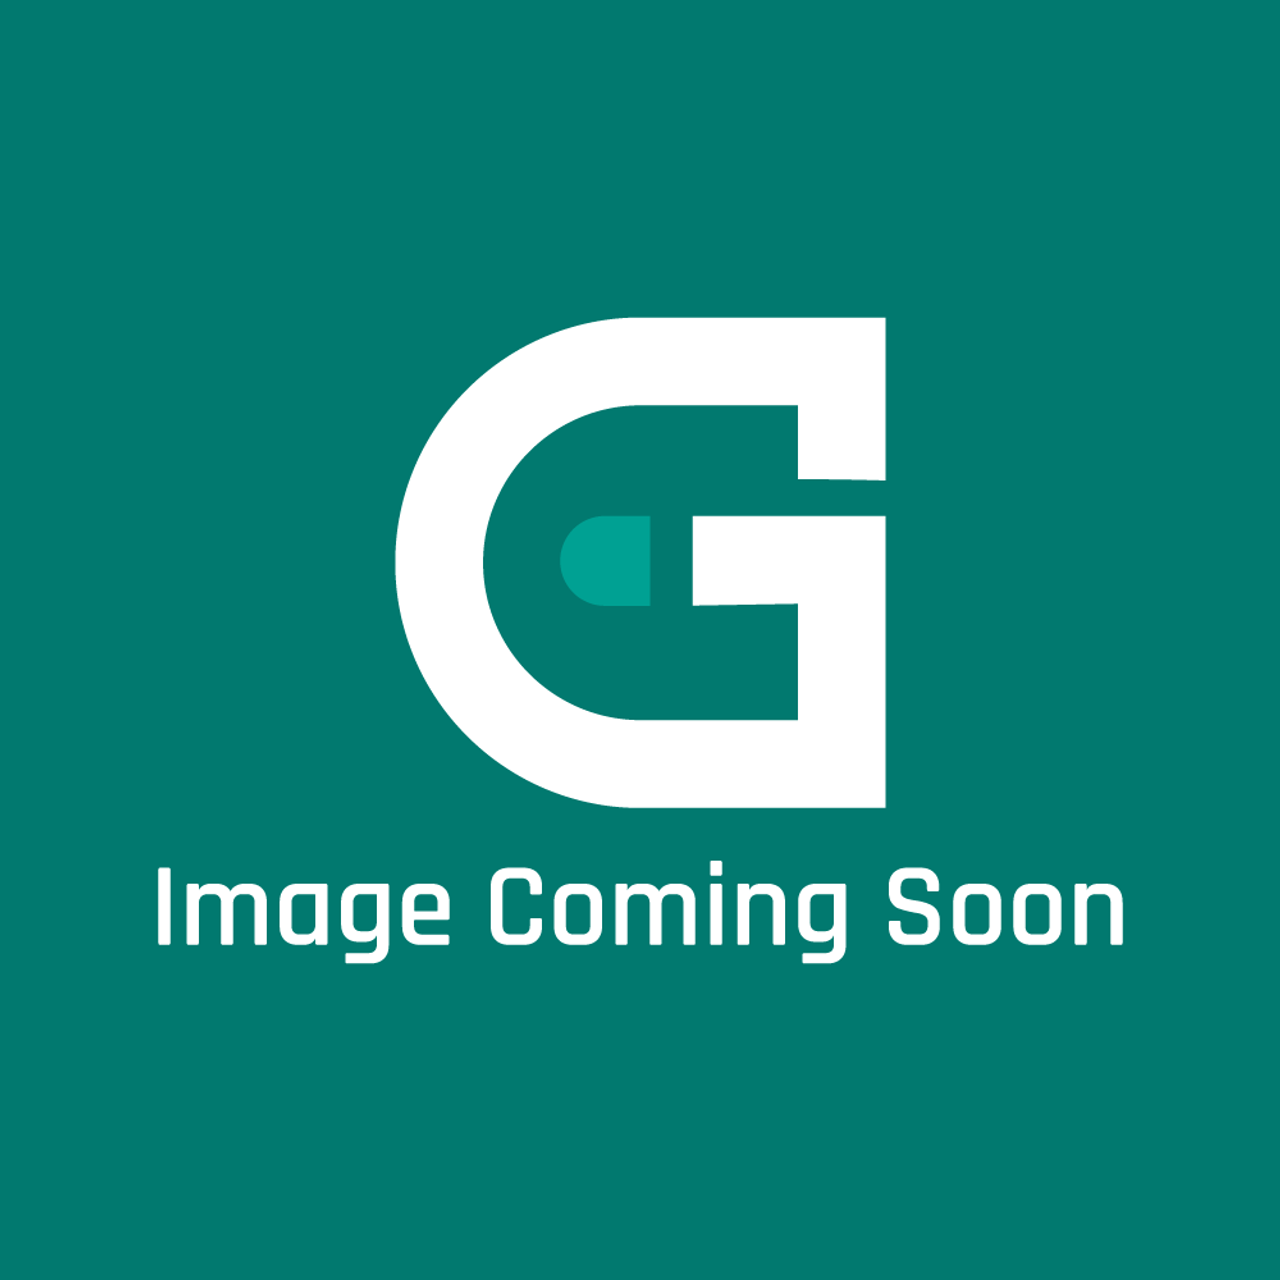 AGA Marvel RG4T310179 - Tstat Ranco Lm7P8514000 200G - Image Coming Soon!